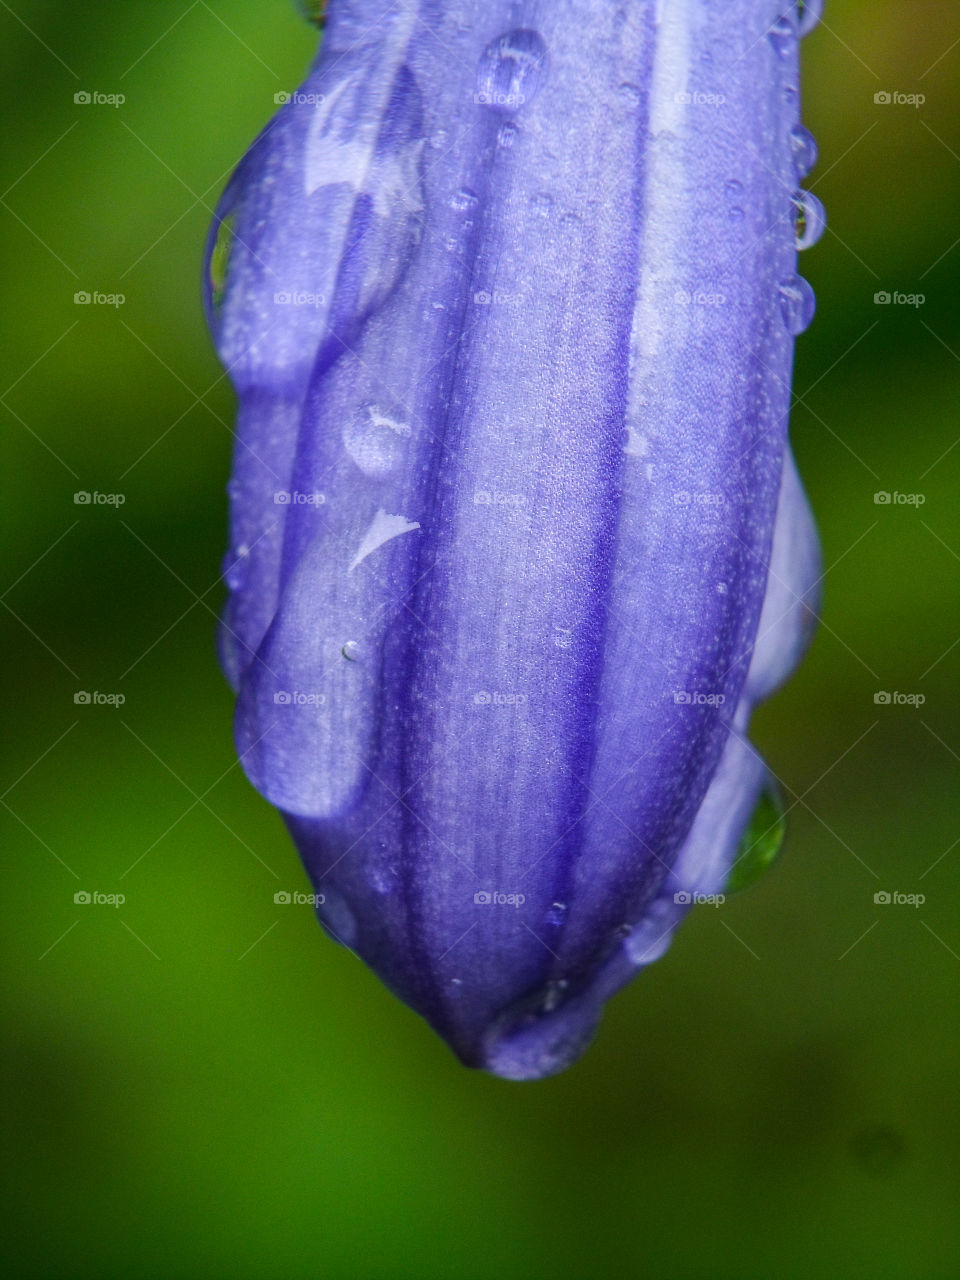 agapanthus flower after summer rains